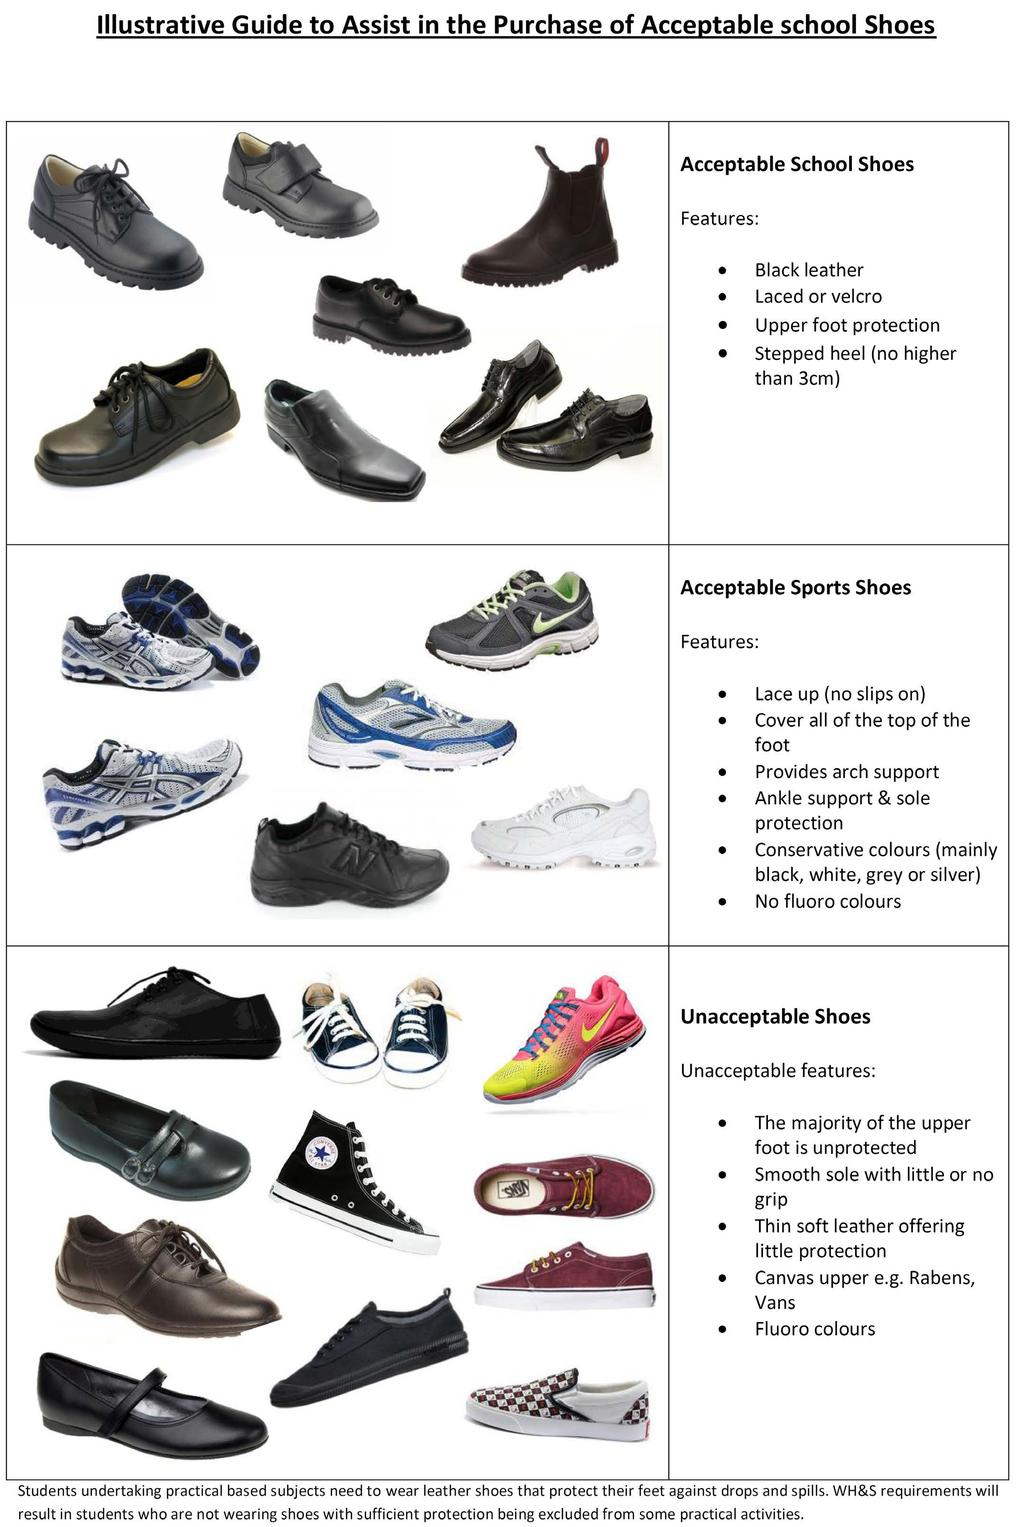 Acceptable School Shoes